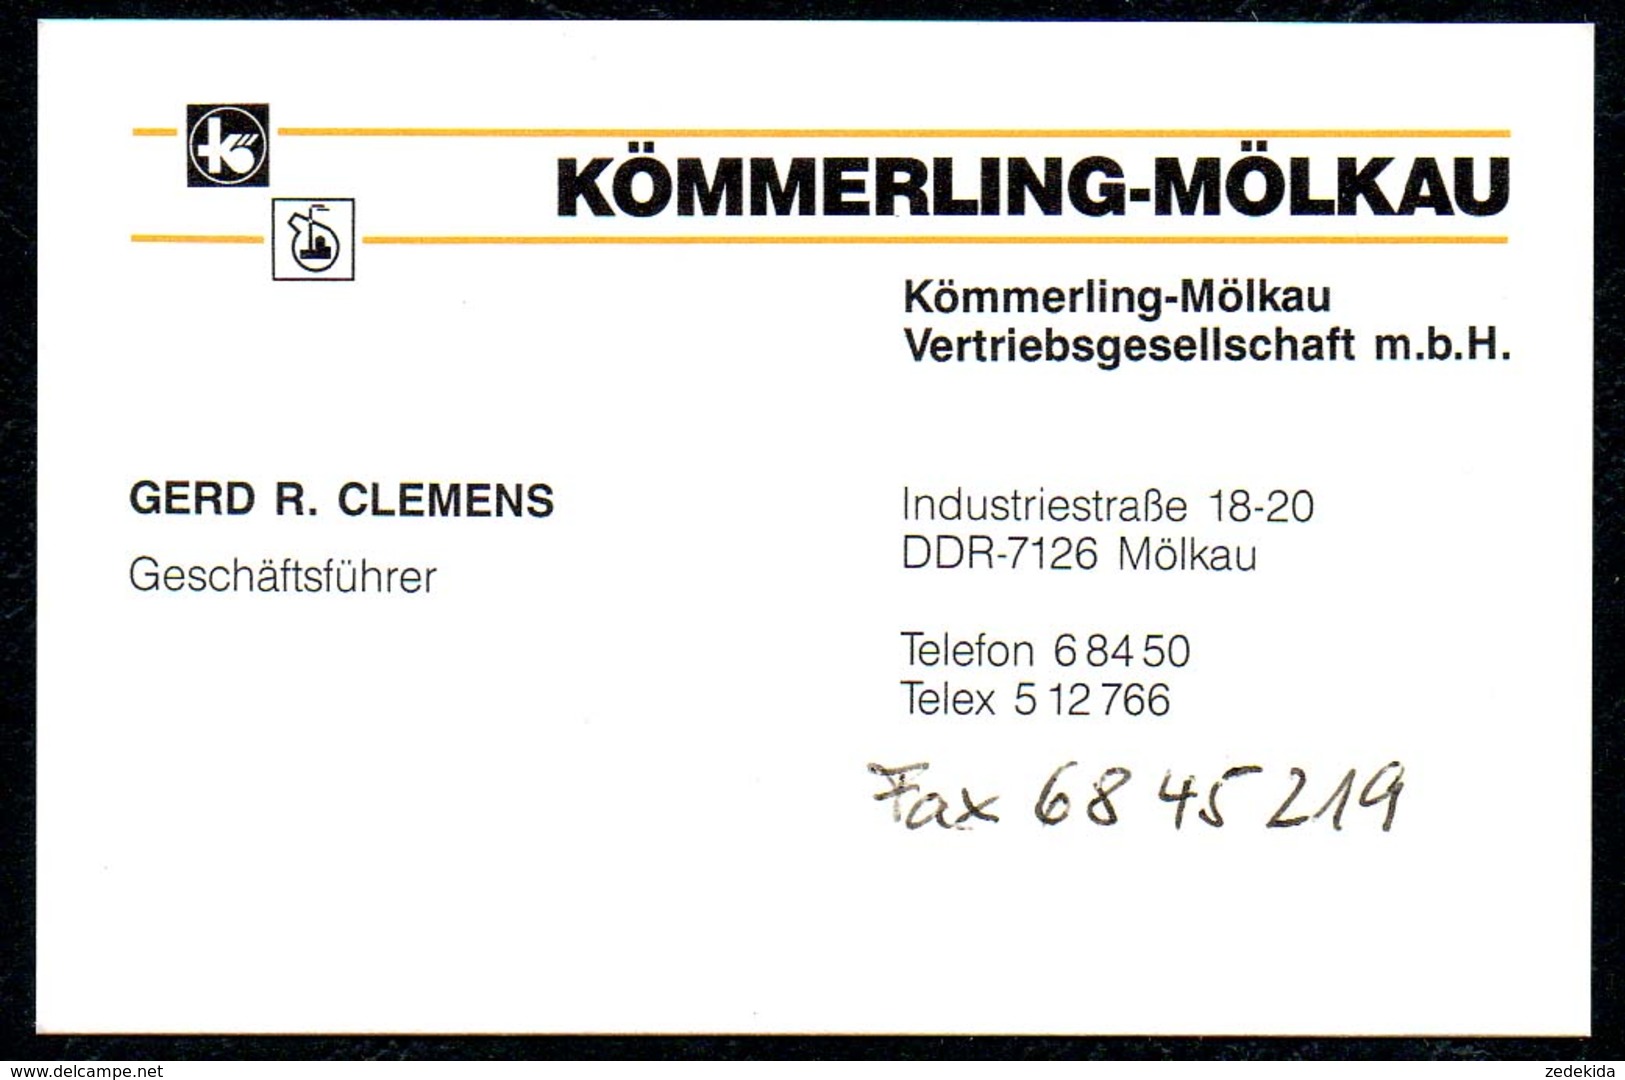 B7341 - Kömmerling Mölkau - Dieter Böttcher Ökonom - Visitenkarte - Visitenkarten